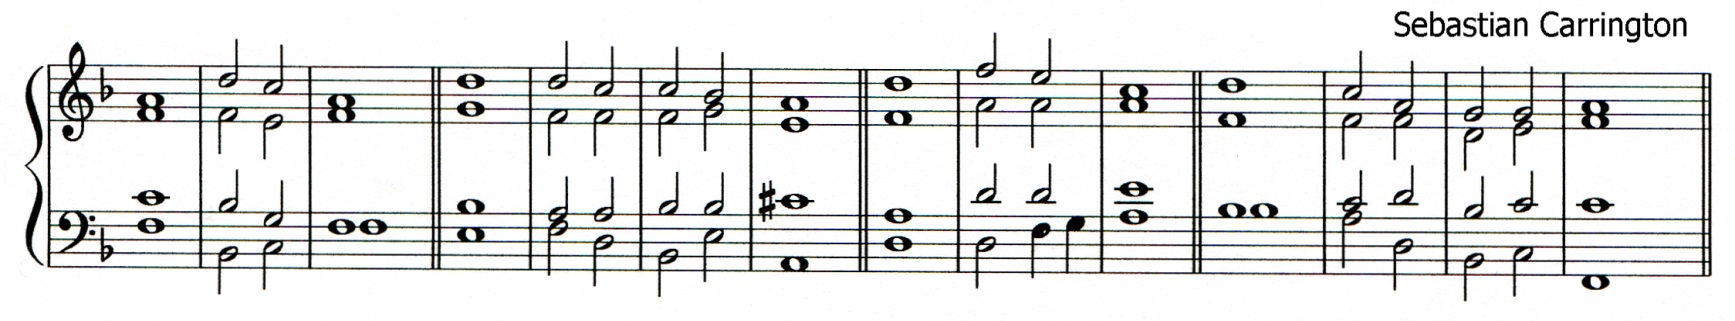 Double chant in F major by Sebastian Carrington